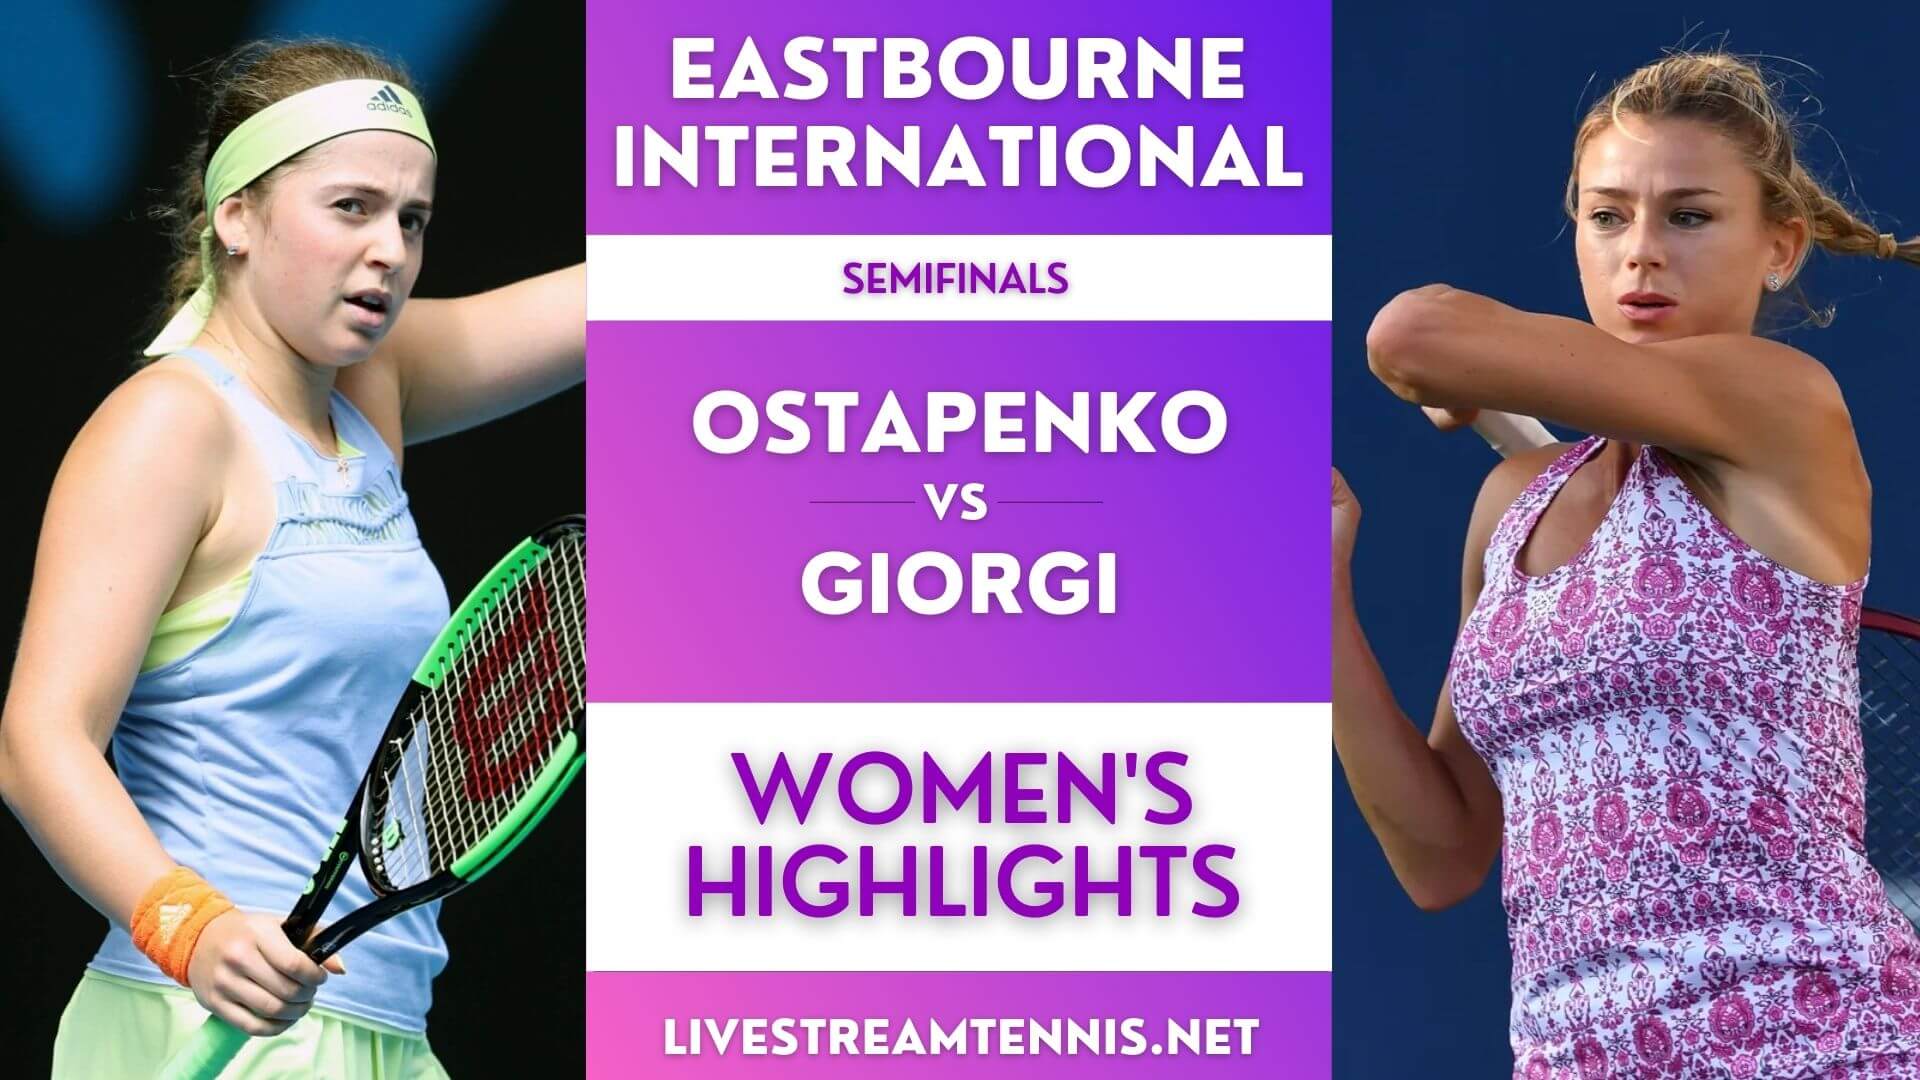 Eastbourne International Ladies Semifinal 1 Highlights 2022